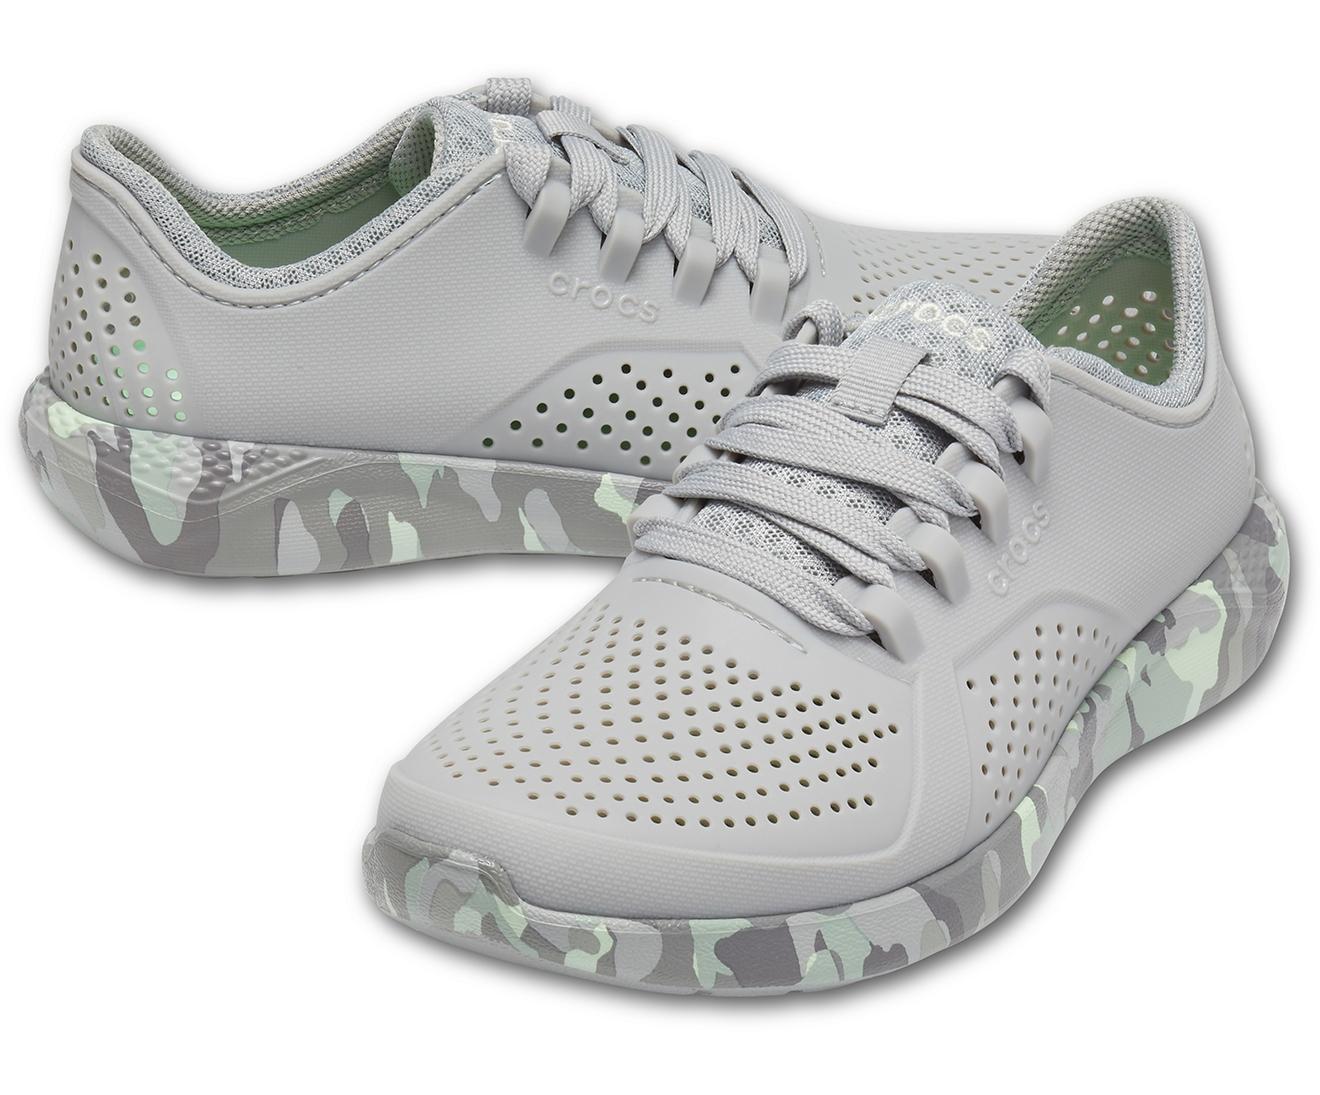 Crocs NEW Literide Graphic slip on grey camo comfort shoes trainers UK size 3-9 